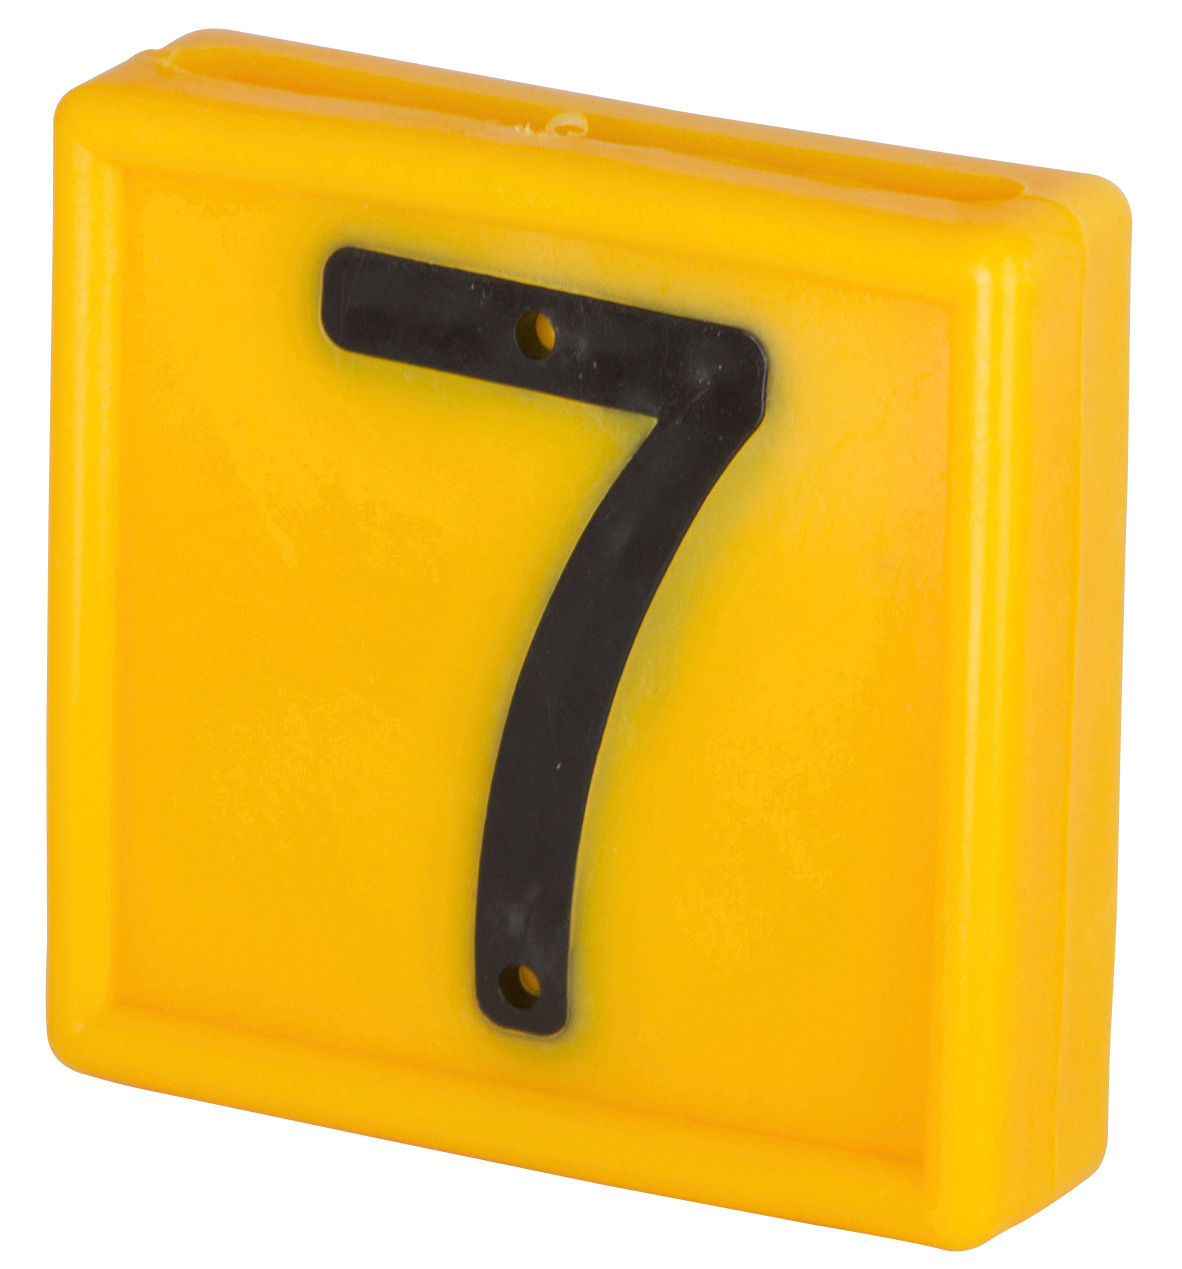 Nummernblock Nr. 7, gelb, einstellig, 44 x 46